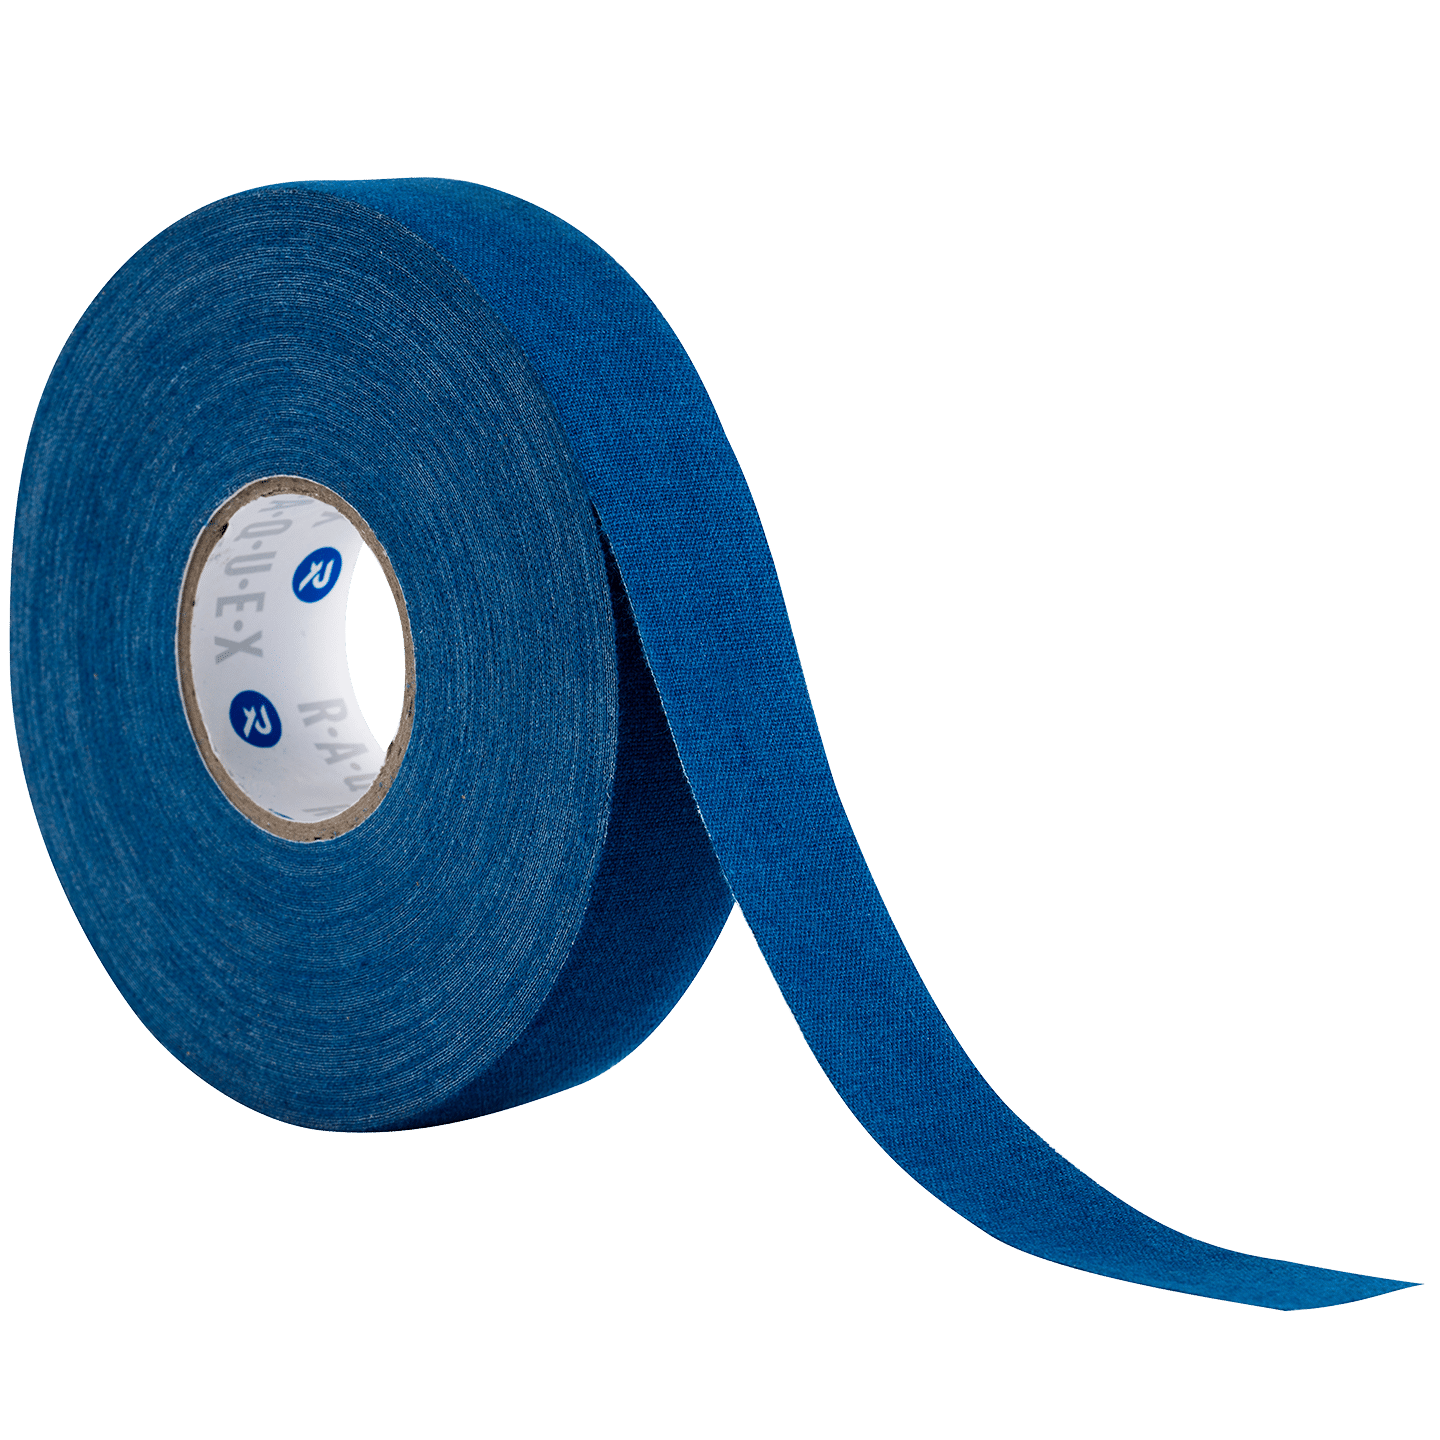 Raquex Sports Cloth Tape - Raquex